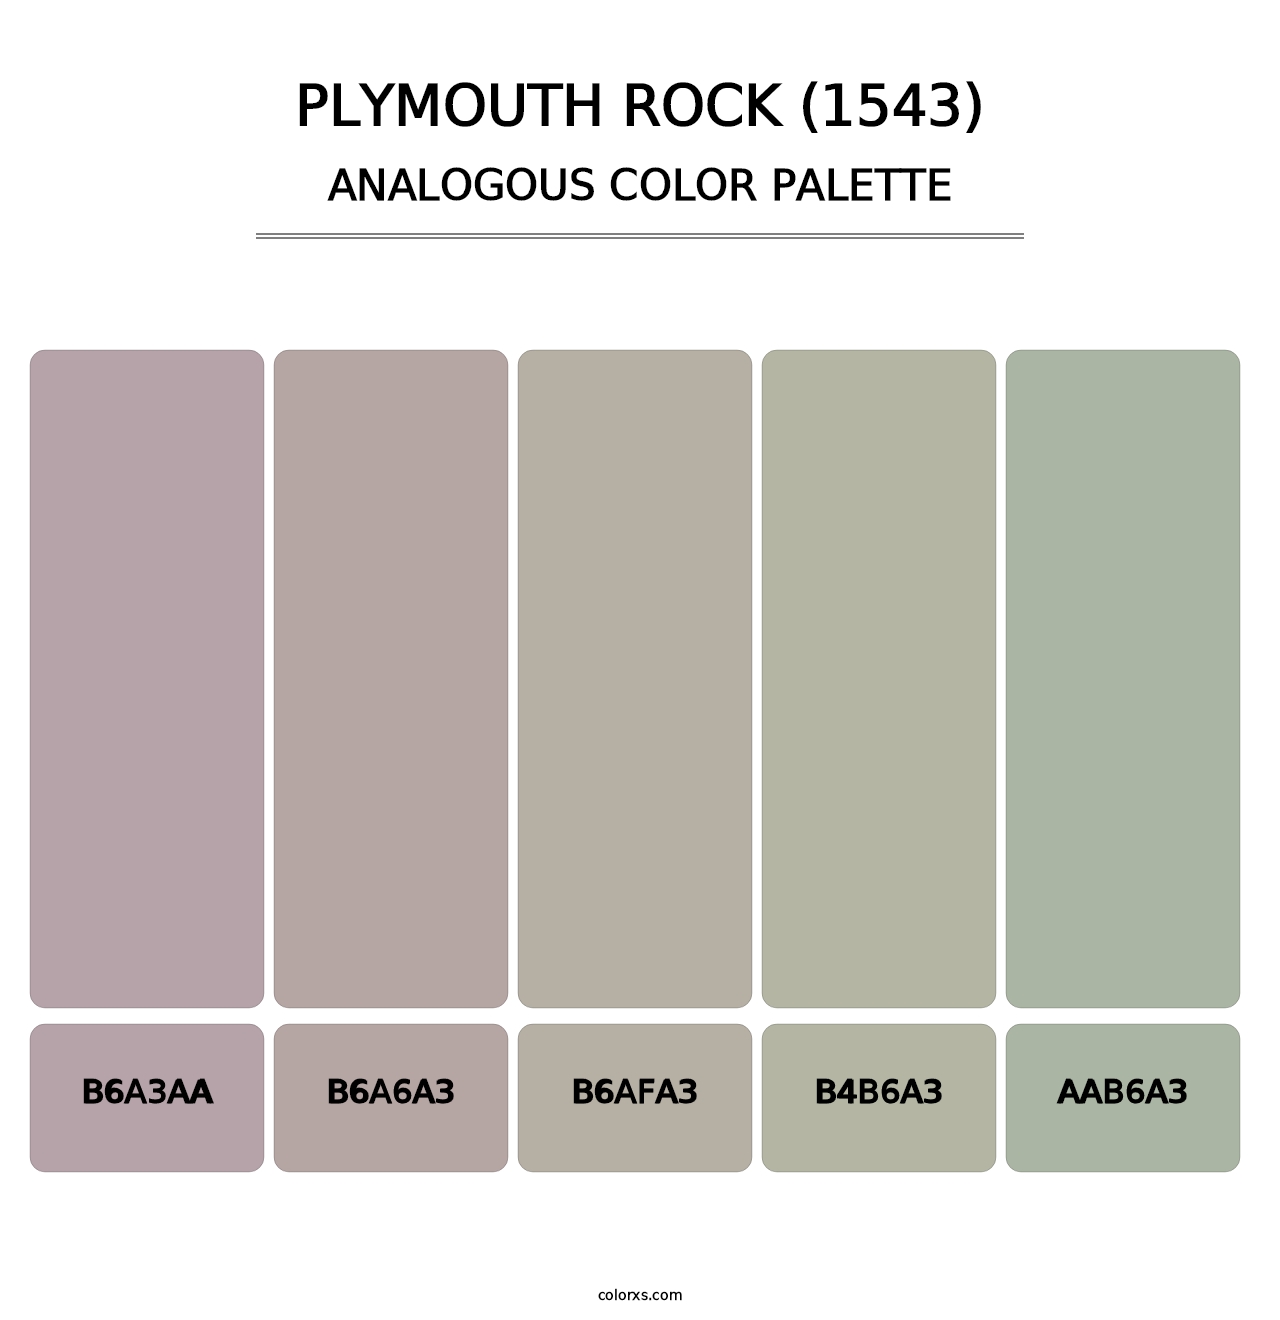 Plymouth Rock (1543) - Analogous Color Palette